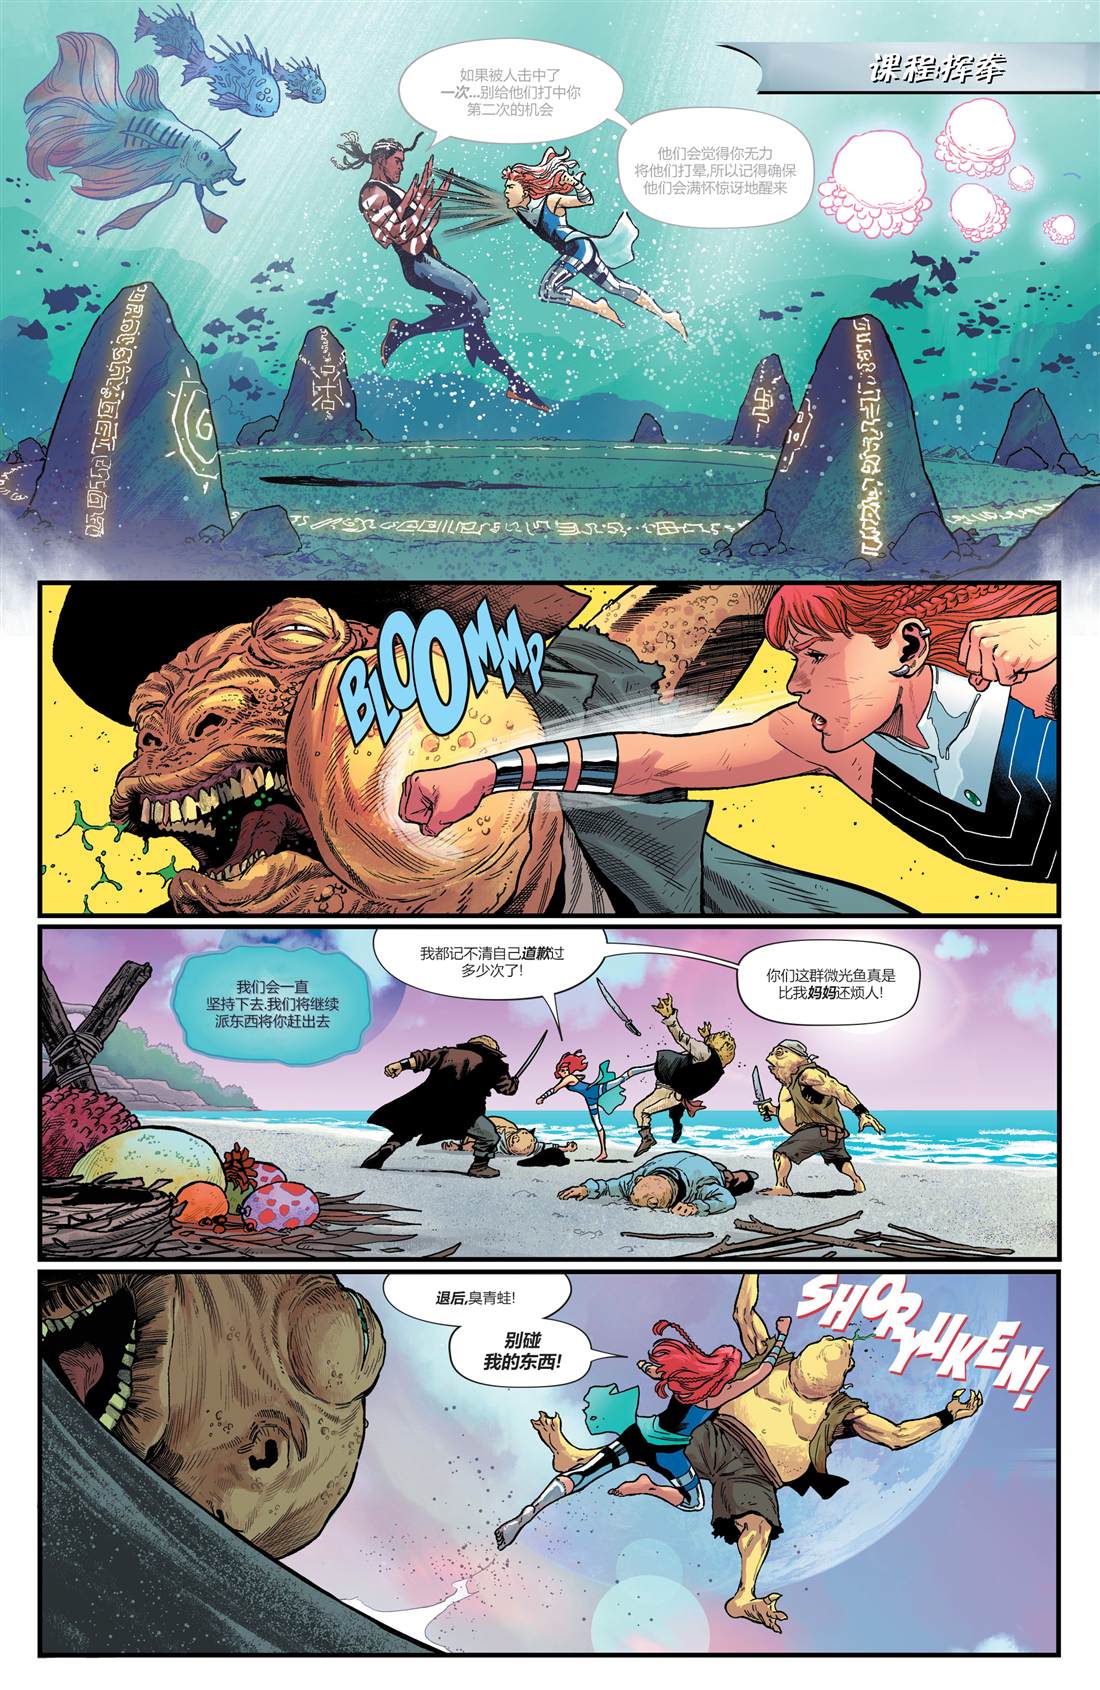 DC未來態 - 水行俠#2 - 3